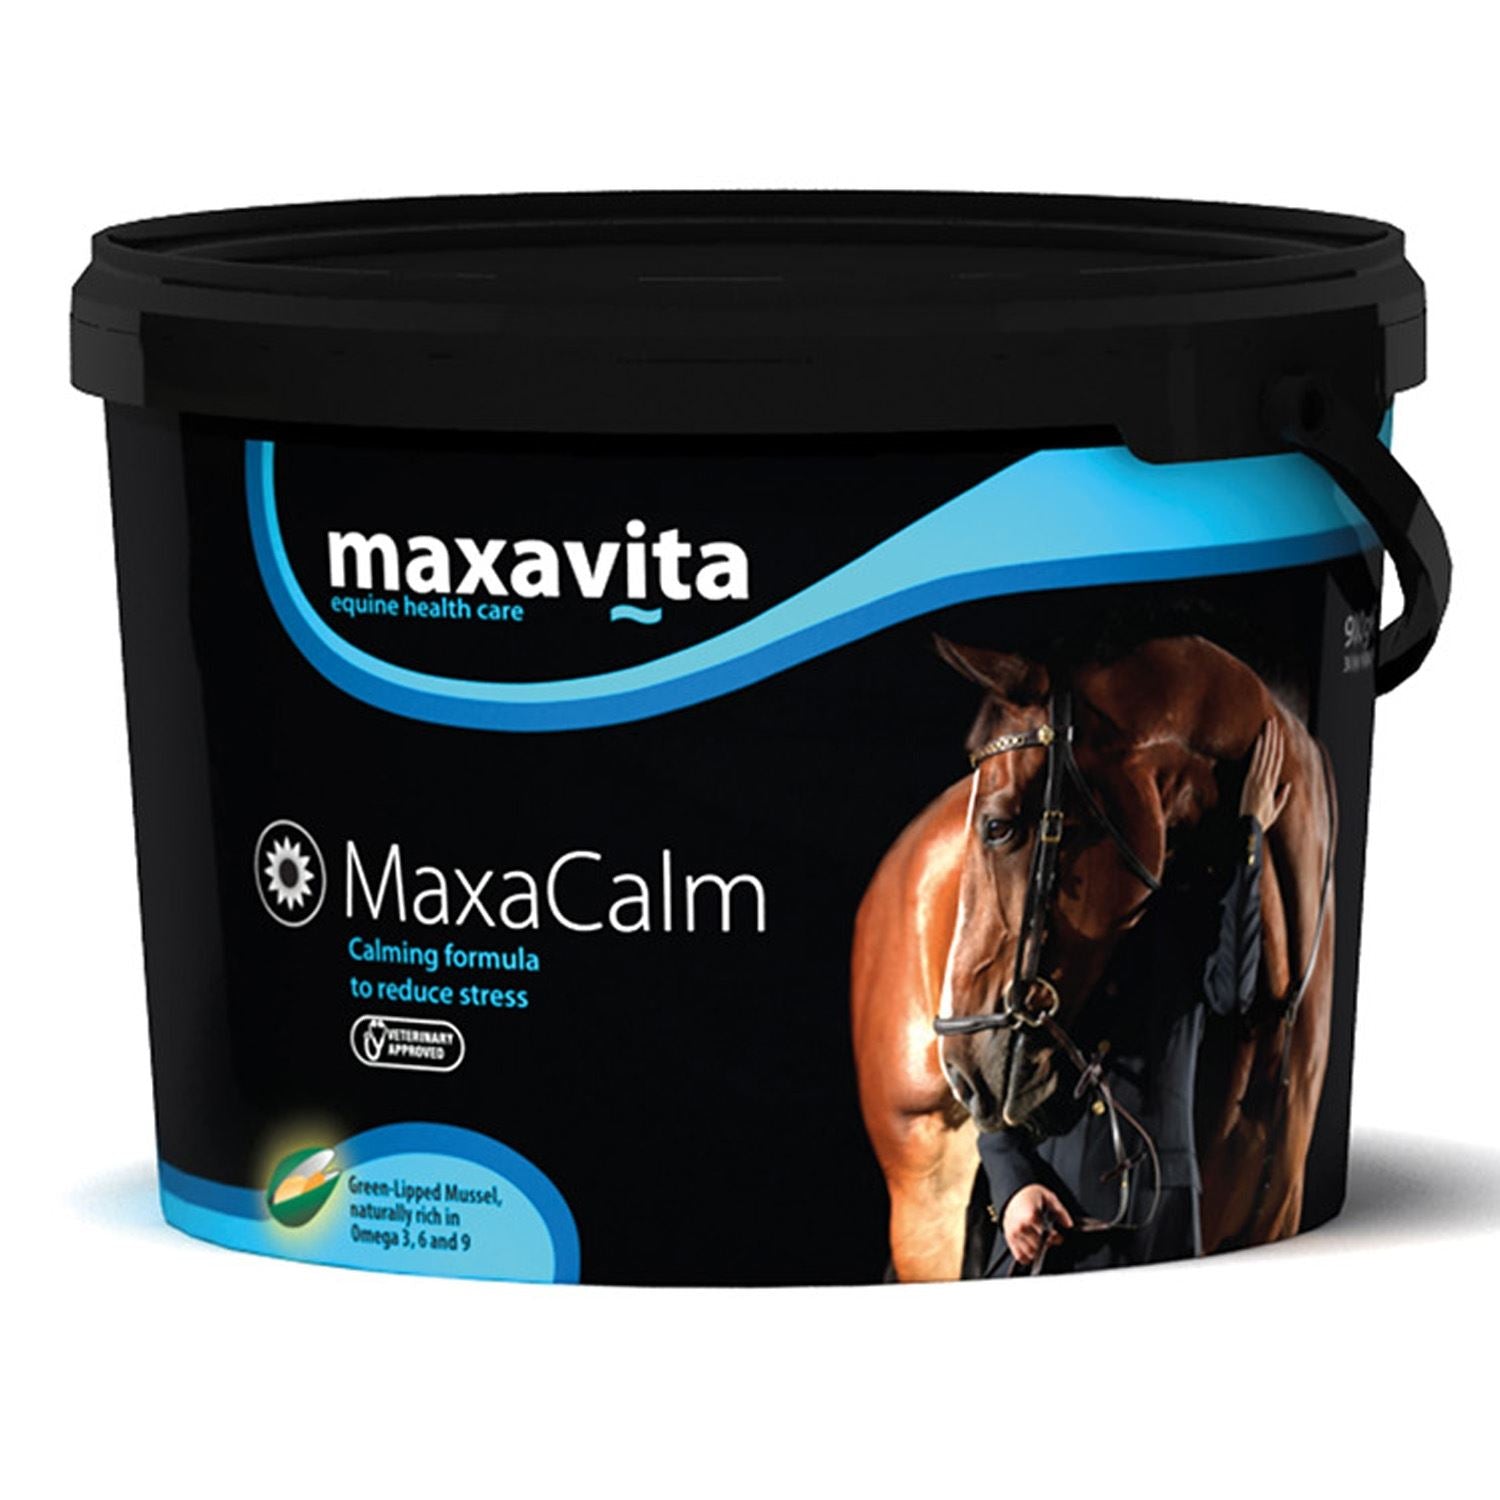 Maxavita Maxacalm - Just Horse Riders